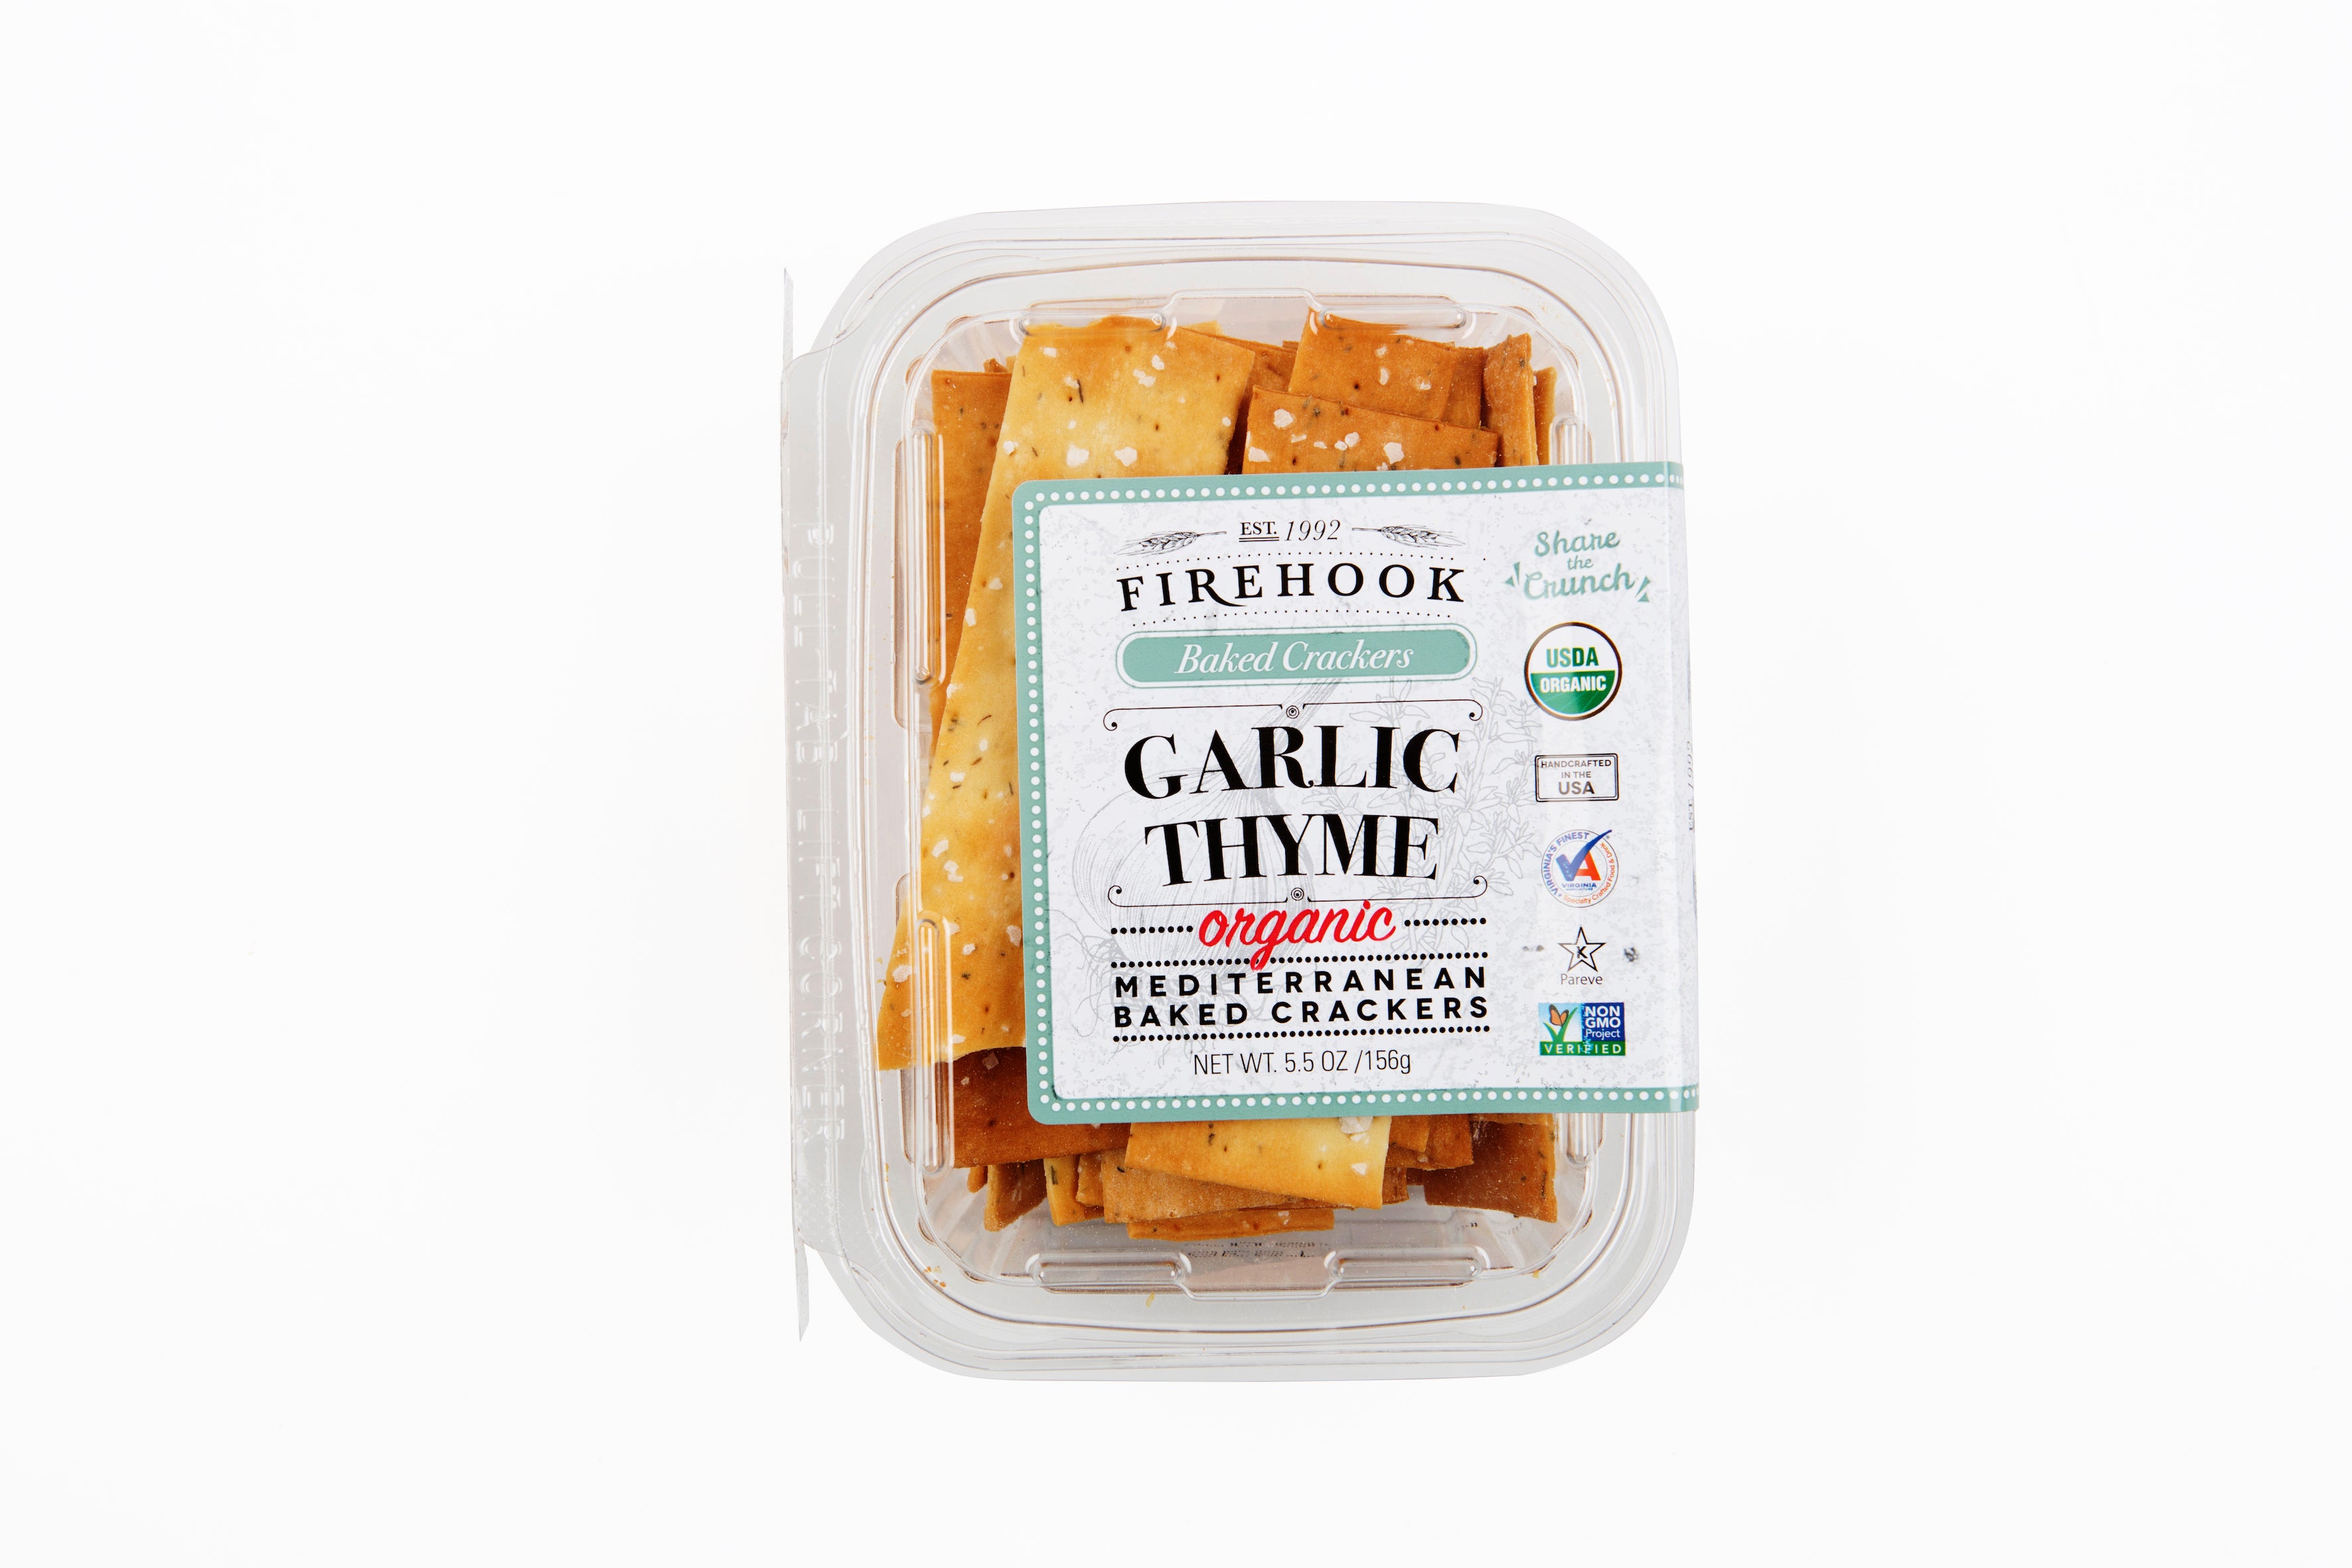 Firehook Mediterranean Baked Crackers - Garlic Thyme